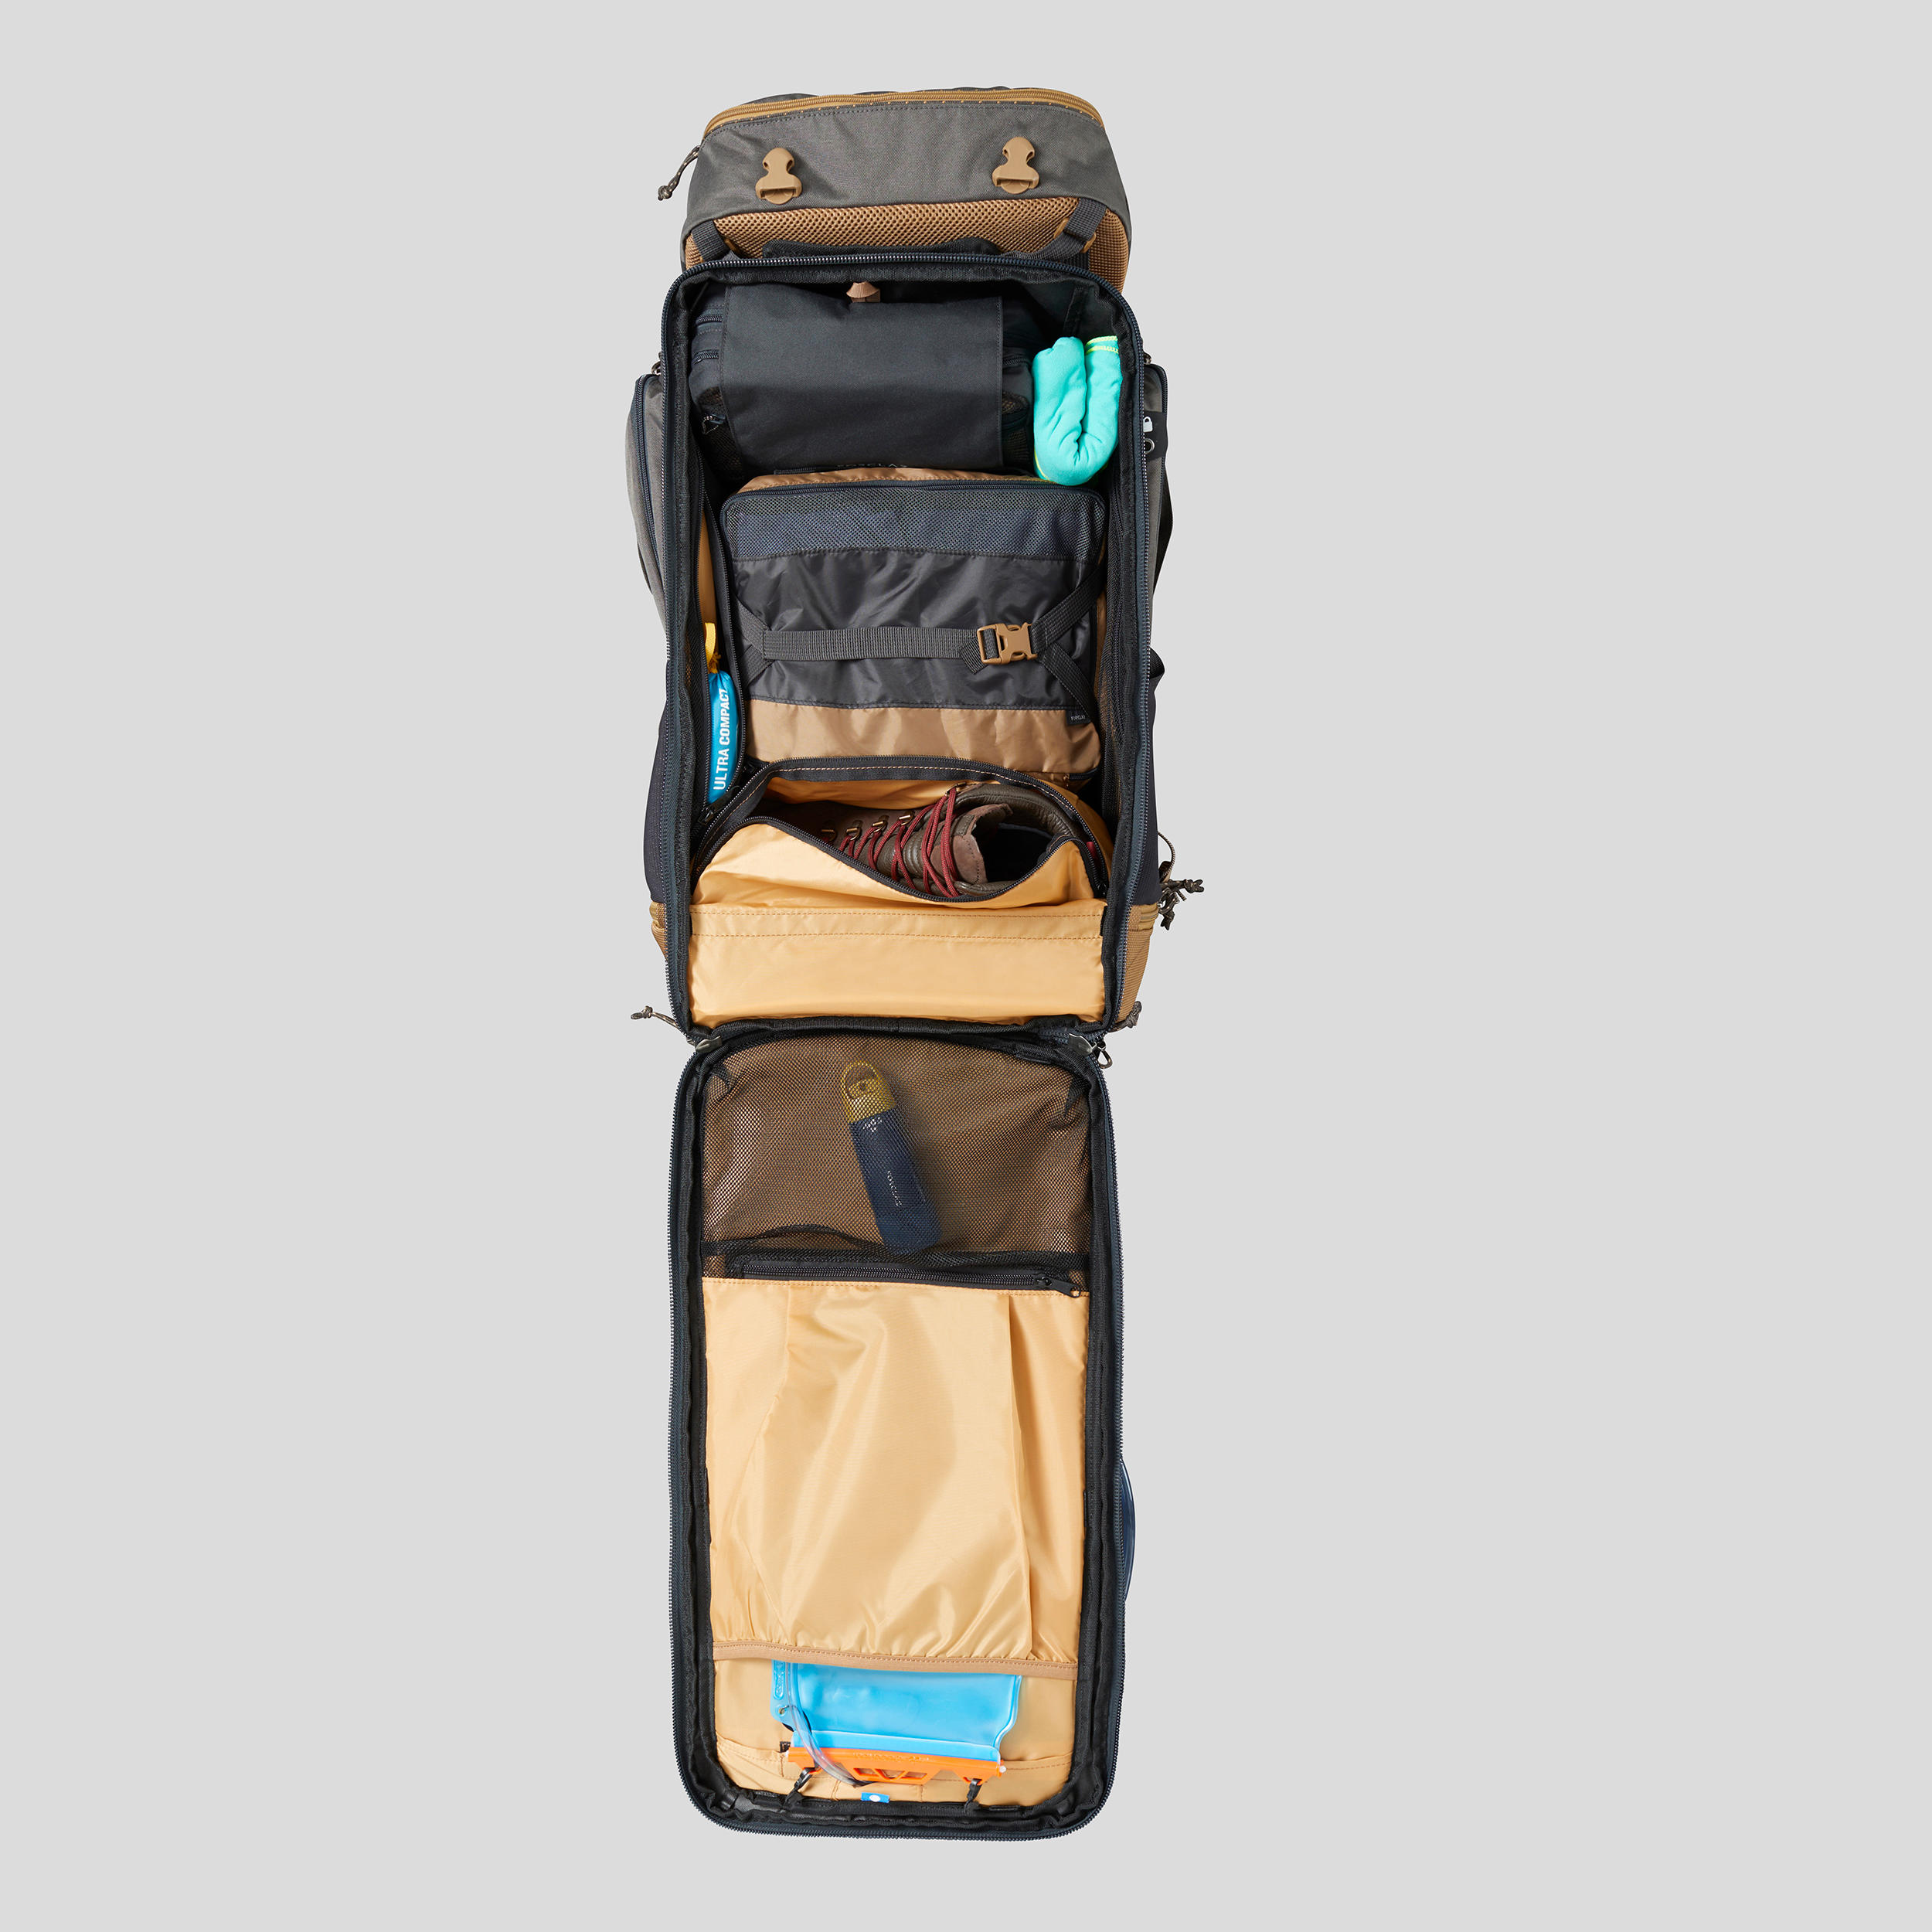 decathlon 50 litre backpack